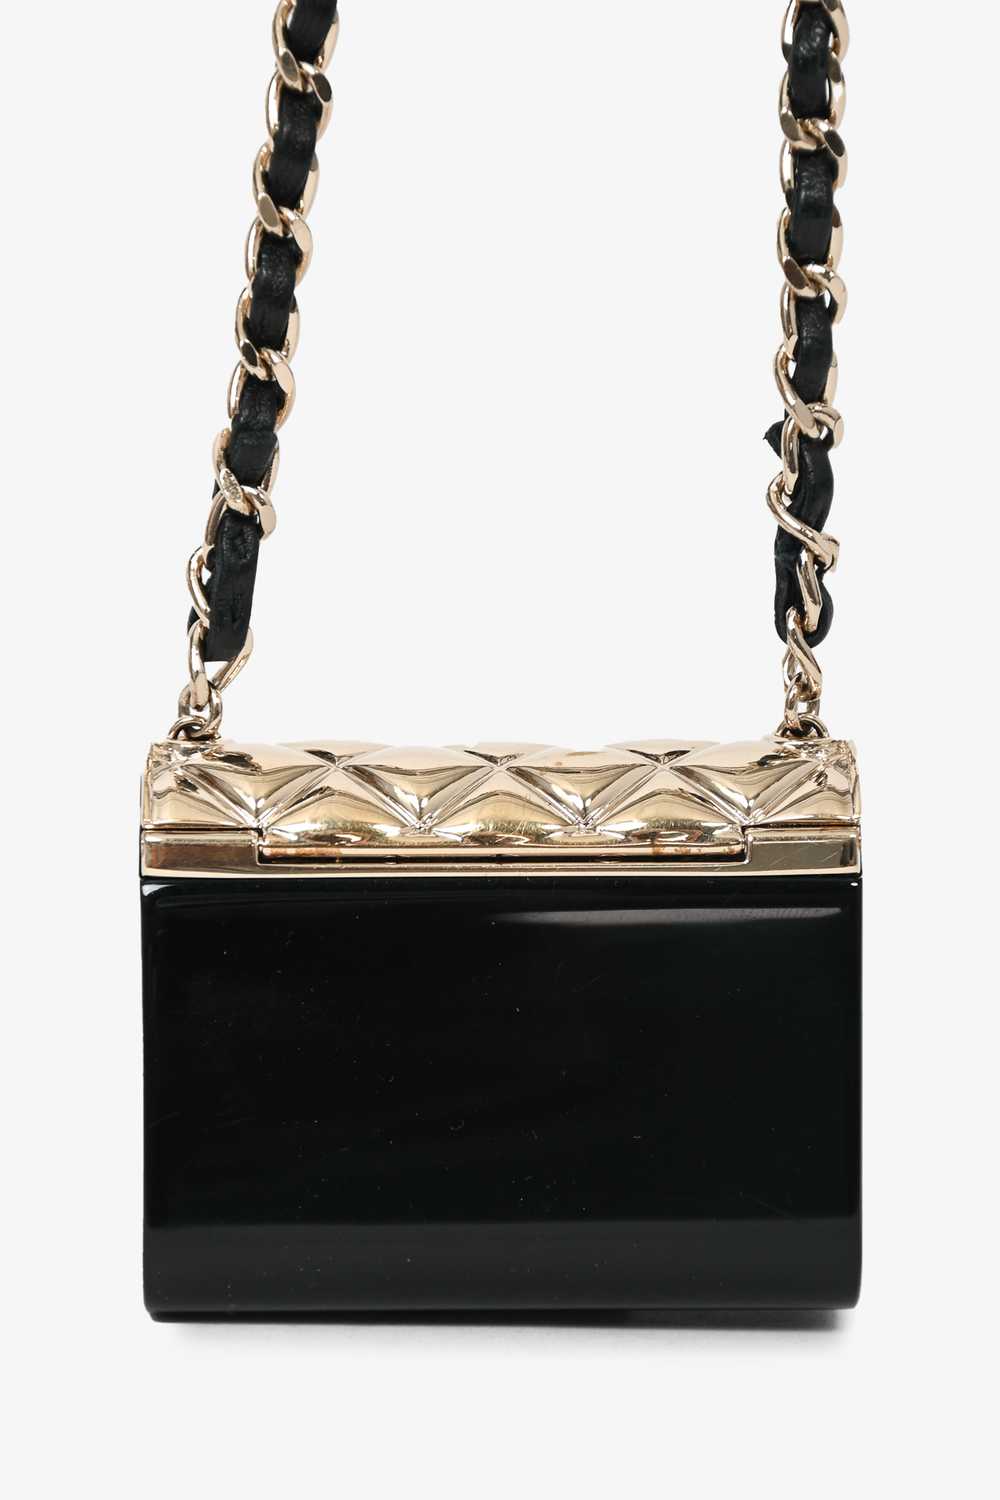 Pre-loved Chanel™ Black/Gold Mini Purse Necklace - image 3